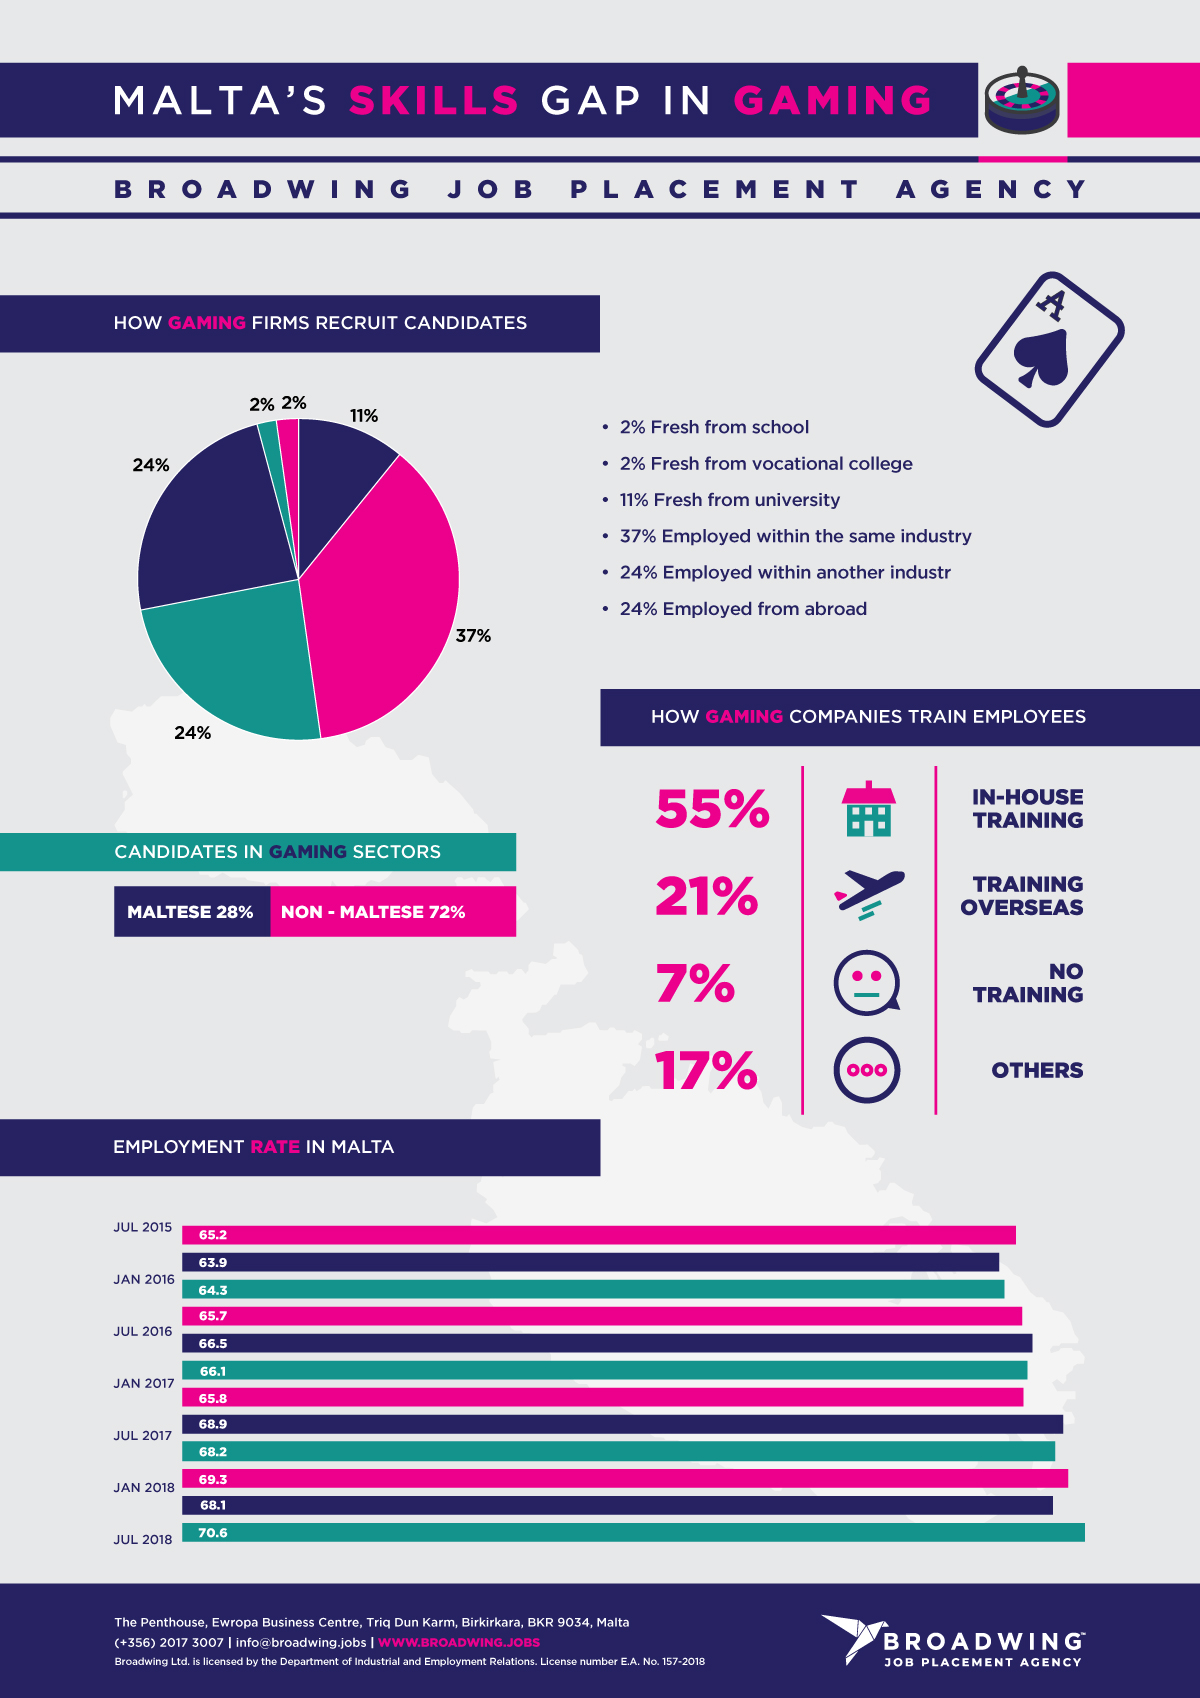 Malta’s Skills Gap in Online Gaming - Infographic